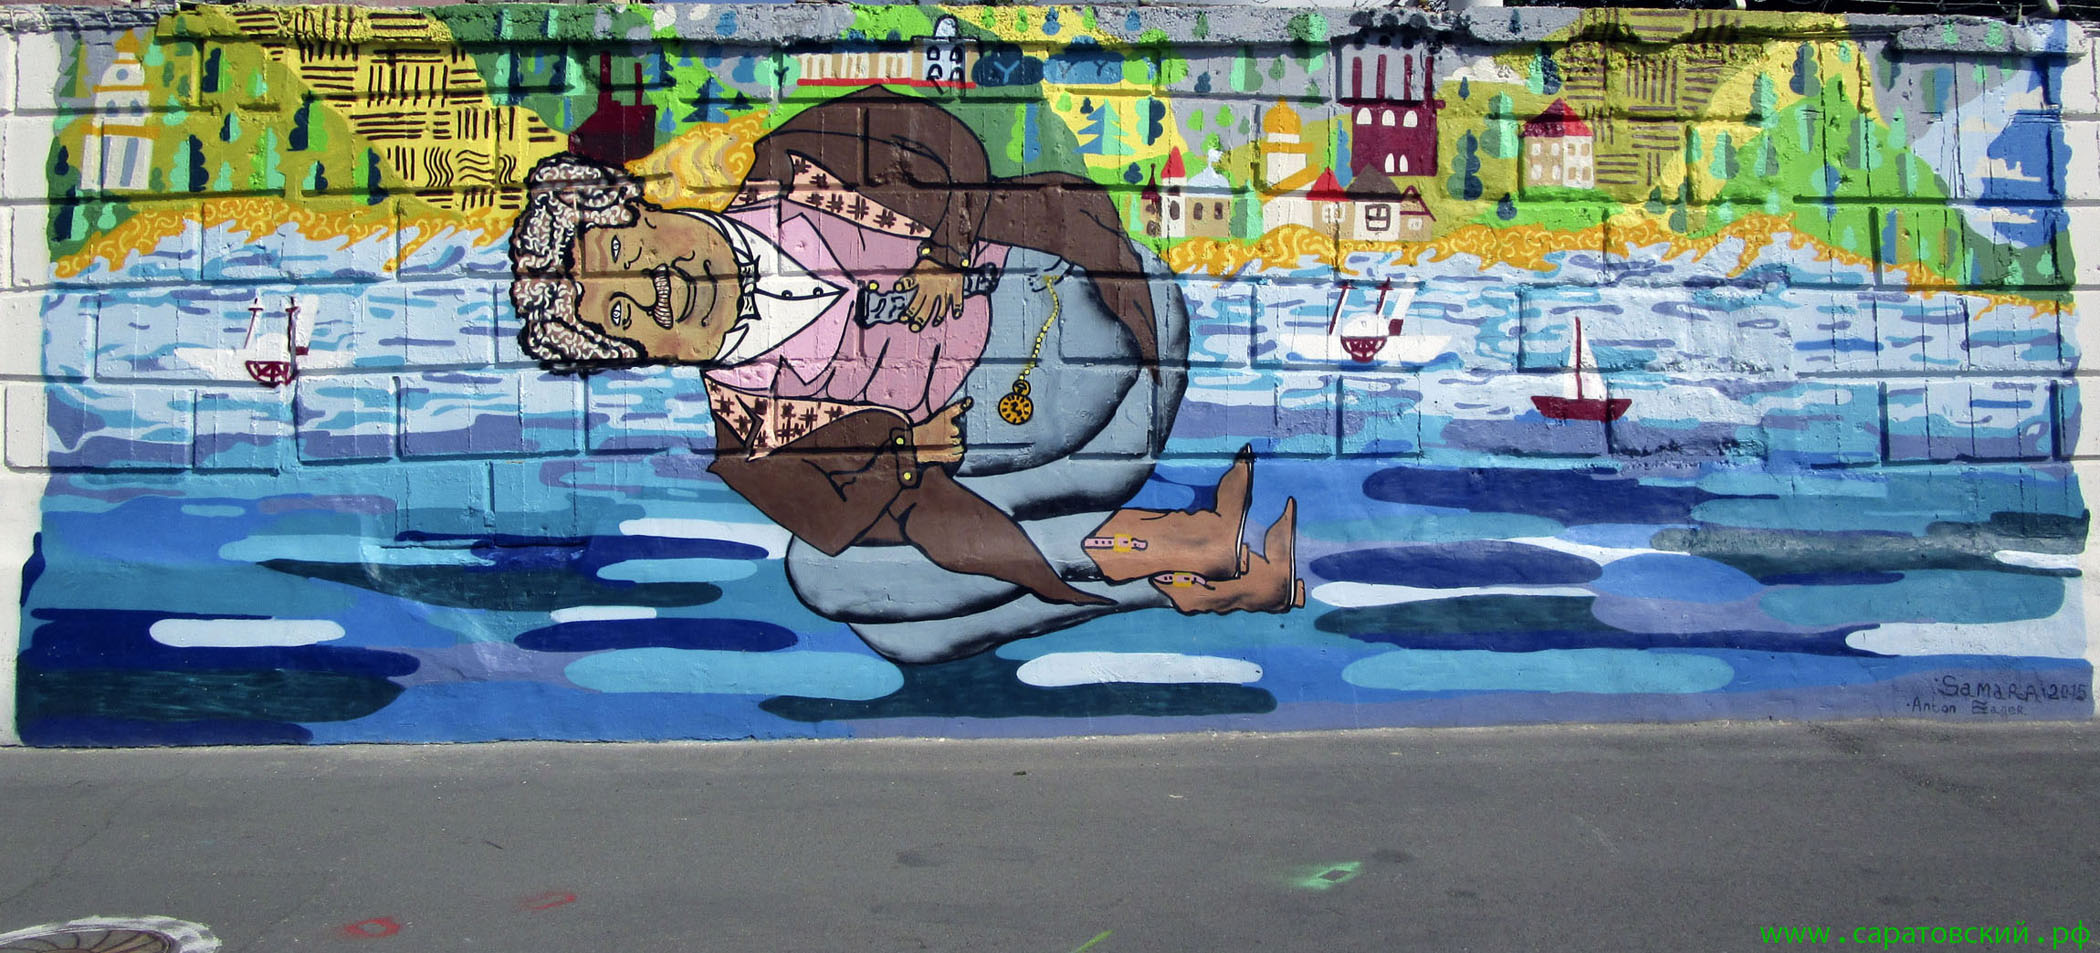 Saratov quayside graffiti: Alexandre Dumas in Saratov, Russia